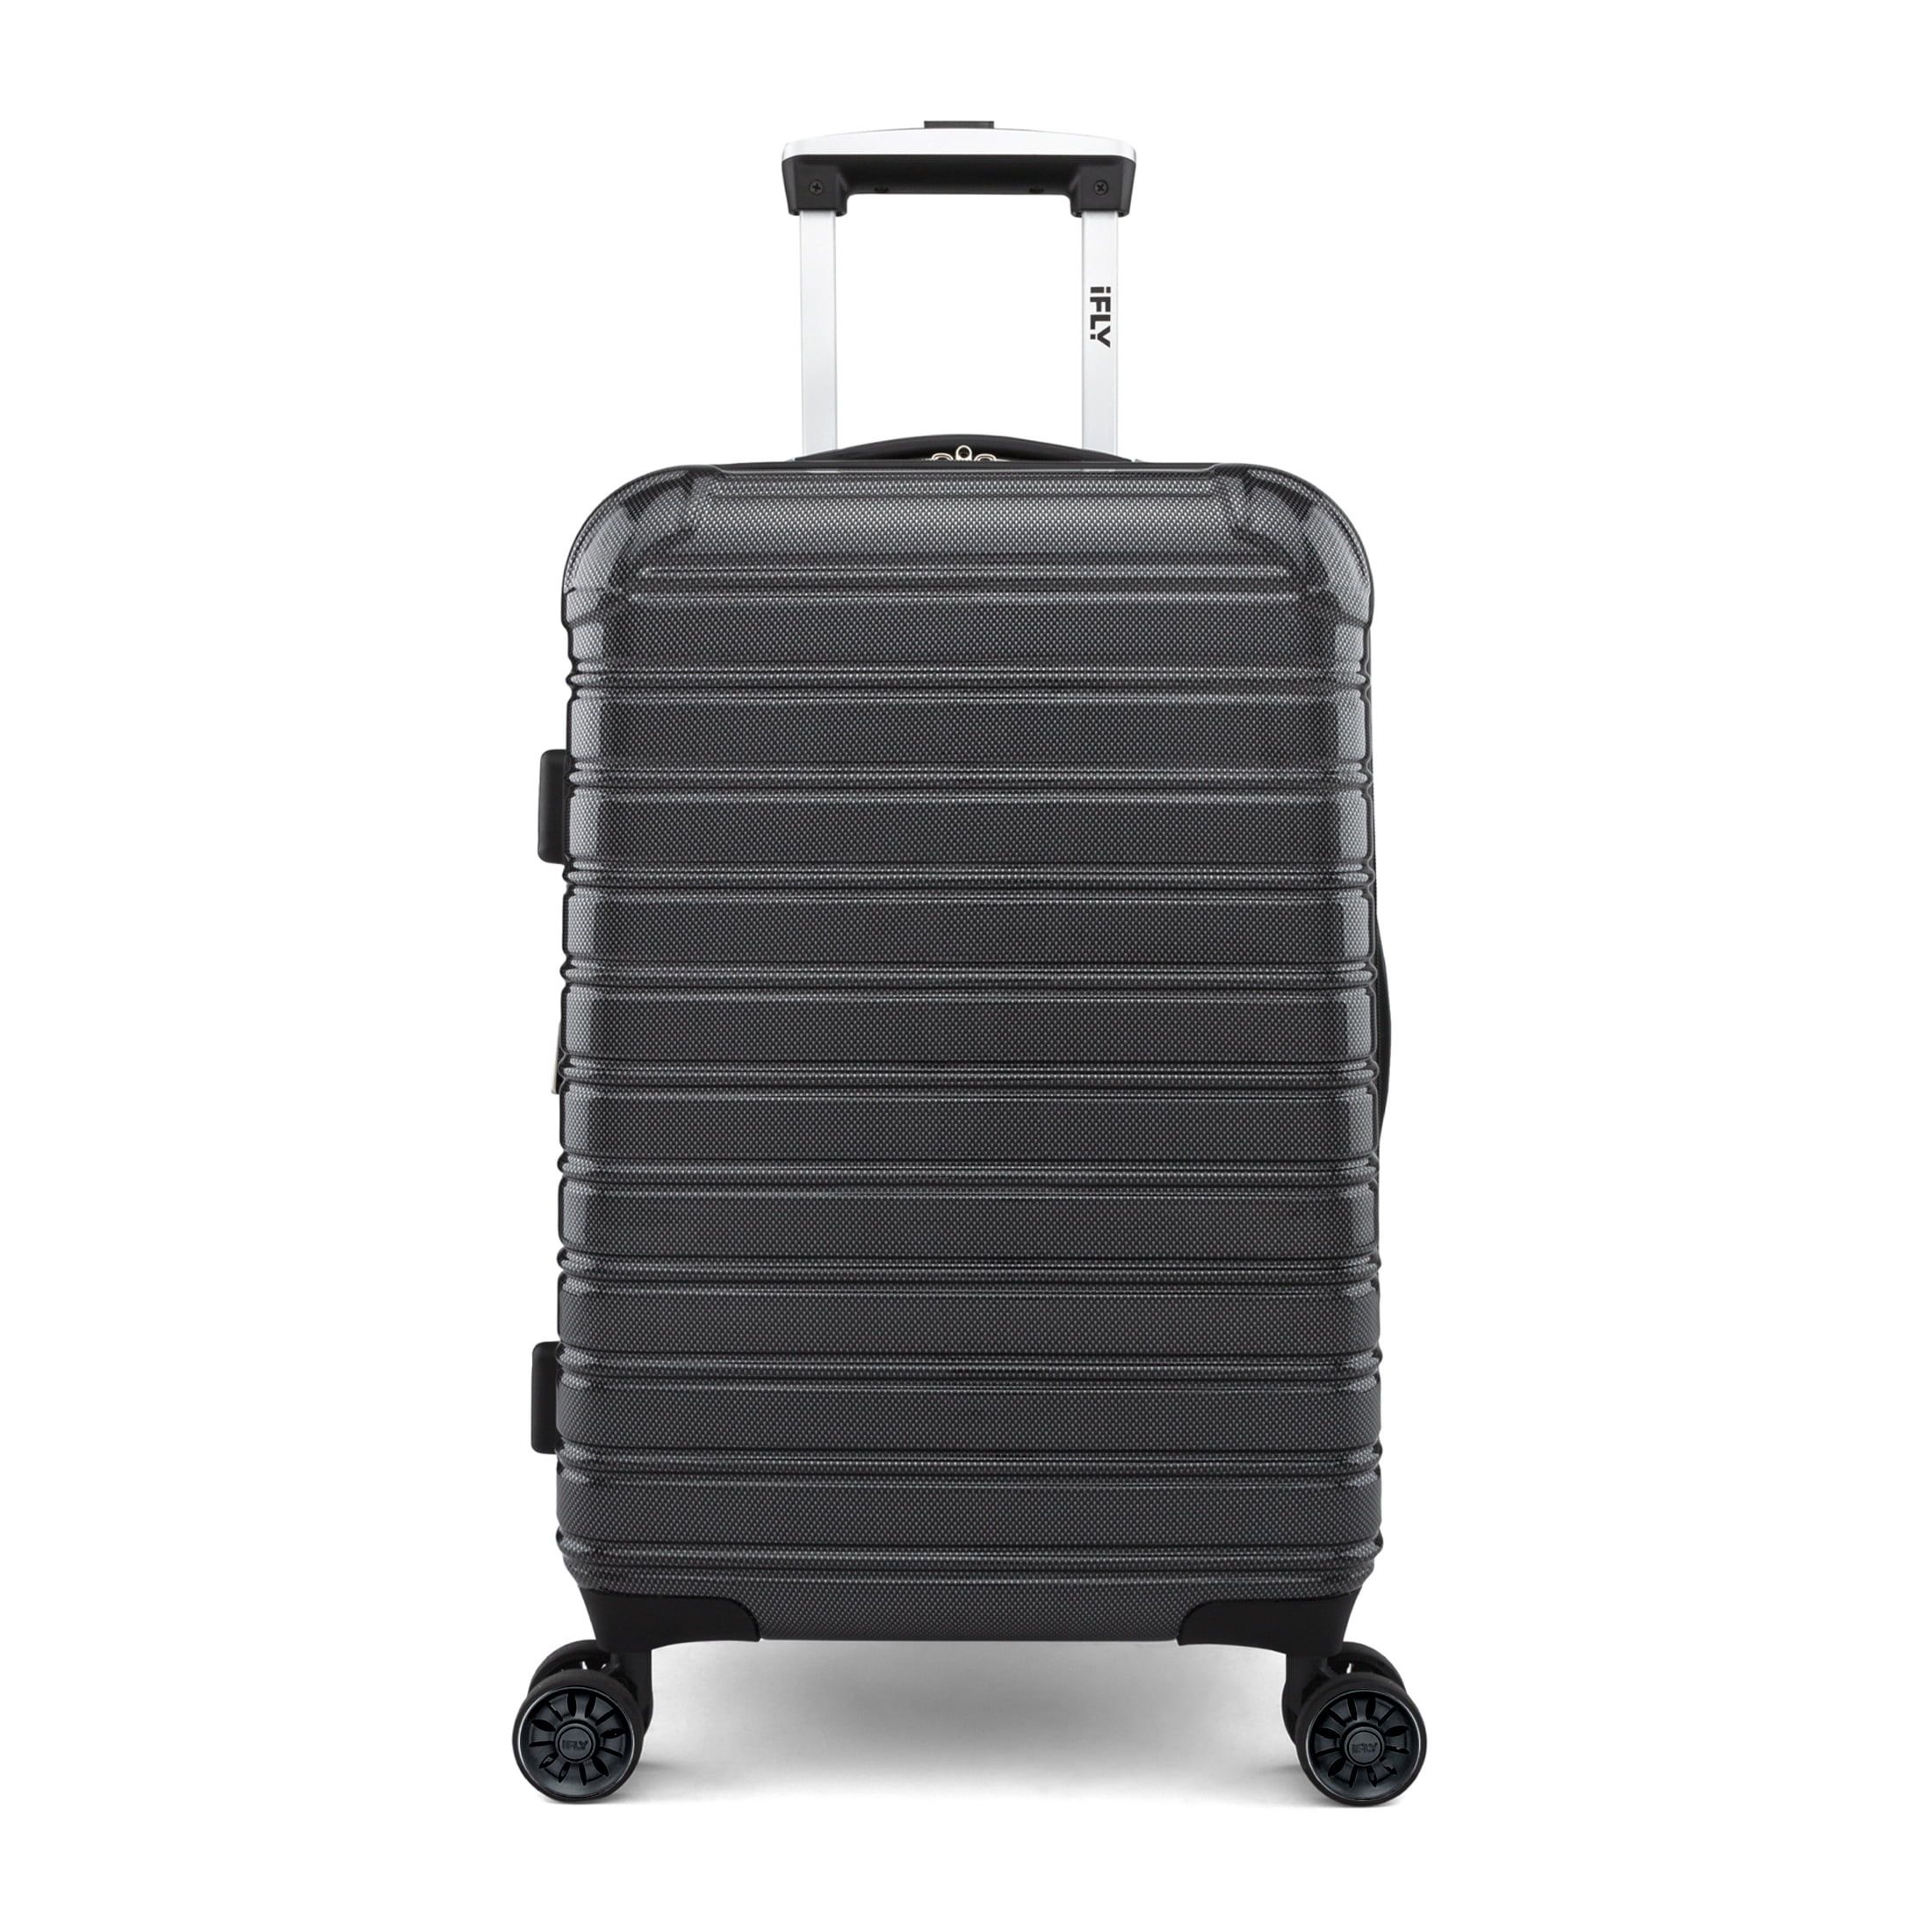 iFLY Hardside Luggage Fibertech 20 Inch Carry-on Luggage, Black | Walmart (US)